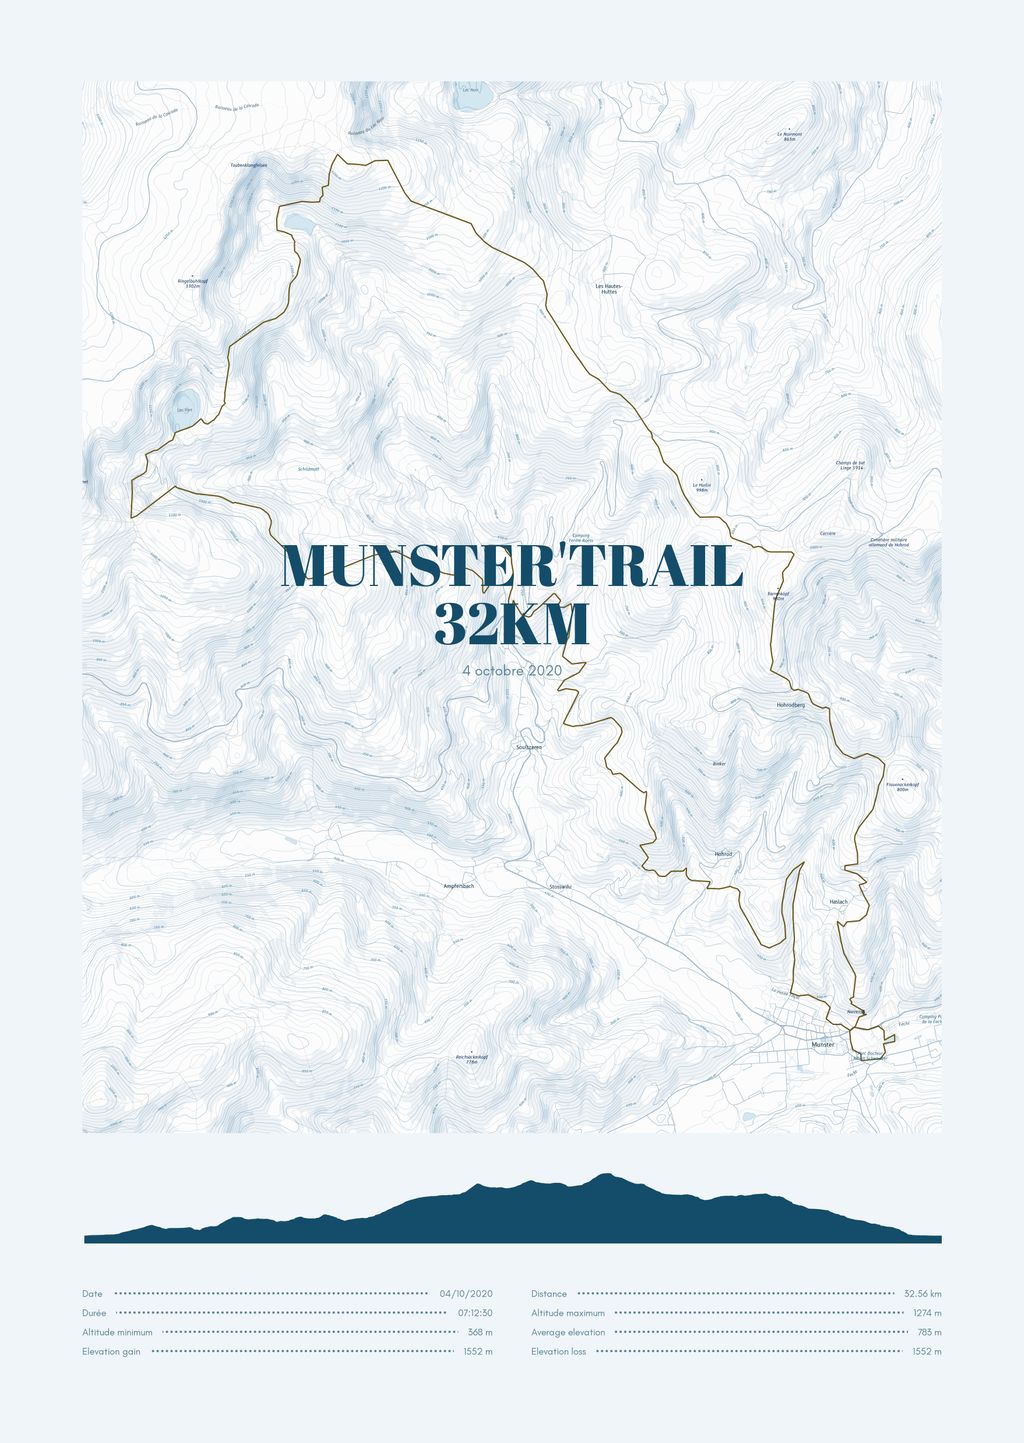 Póster con un mapa de Munster'Trail 
32km